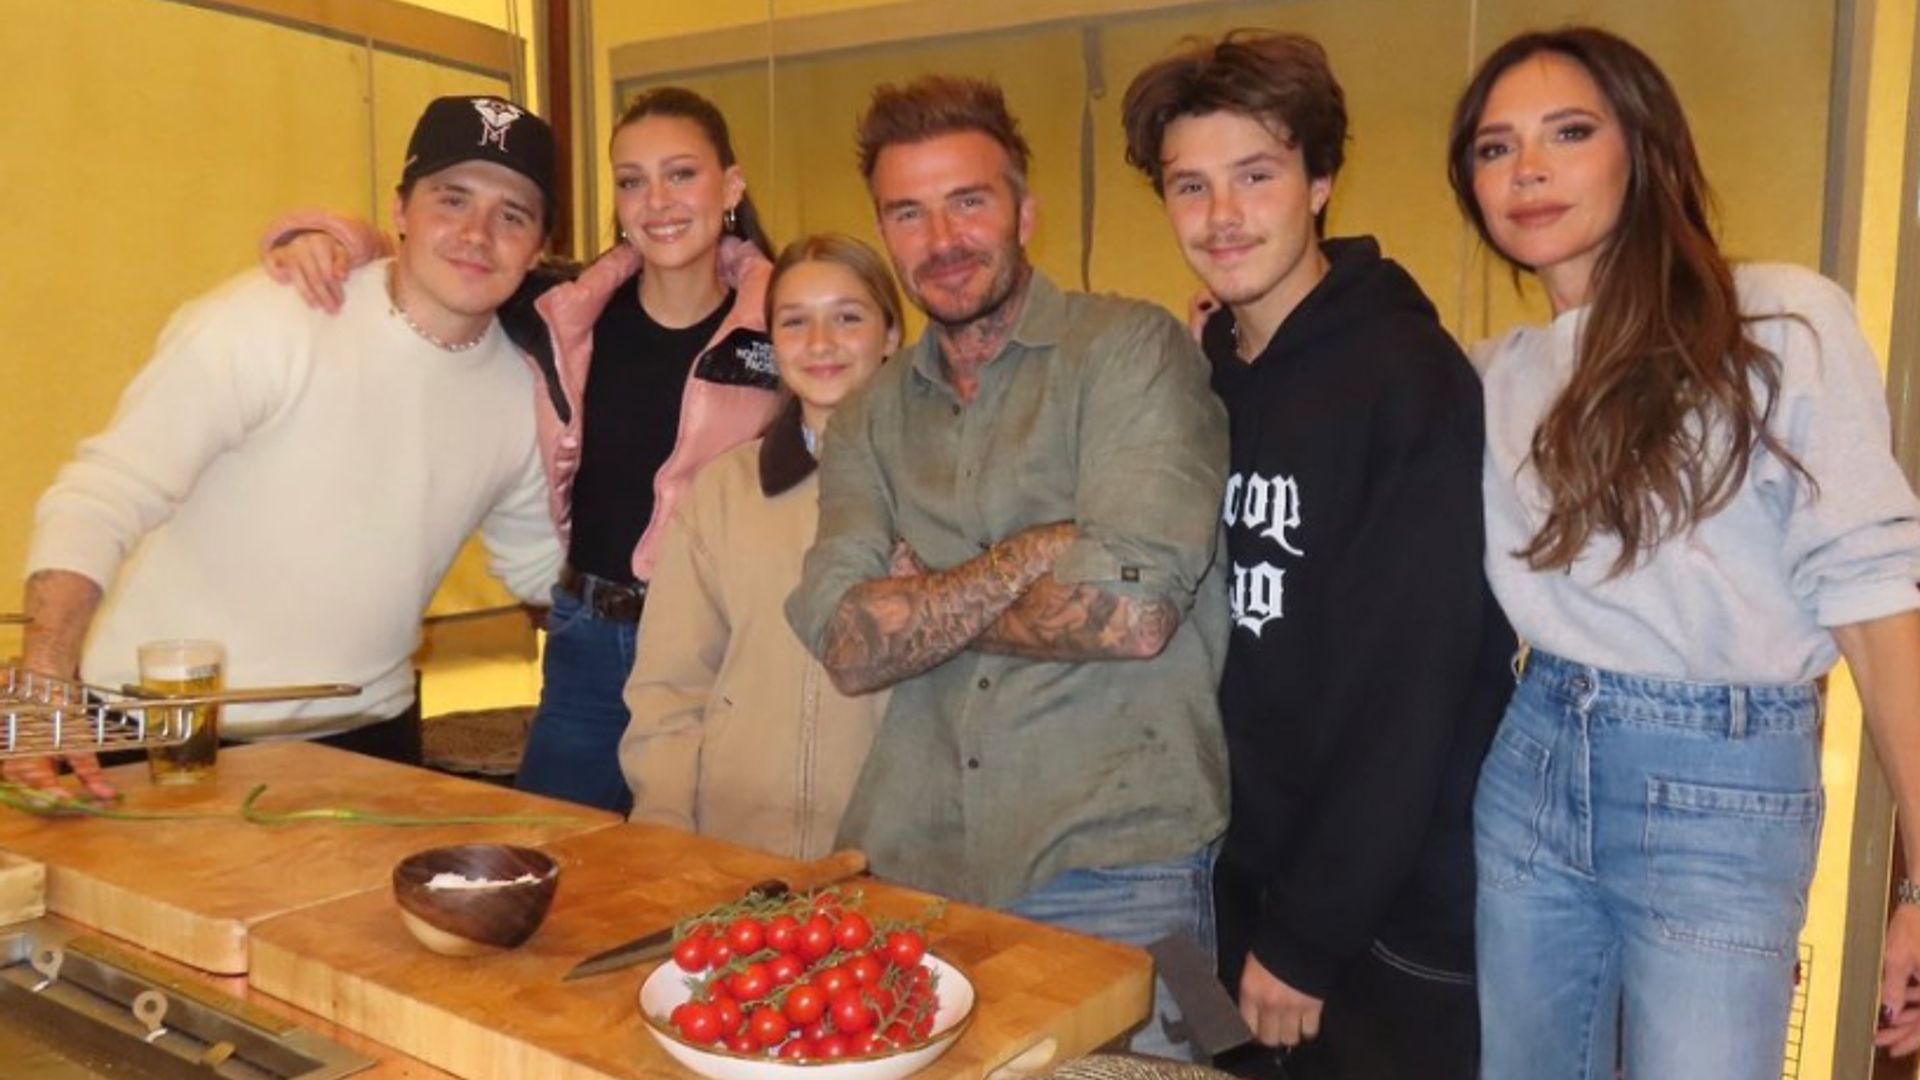 Brooklyn Beckham standing with Nicola Peltz, Harper Beckham, David Beckham, Cruz Beckham and Victoria Beckham in front of food